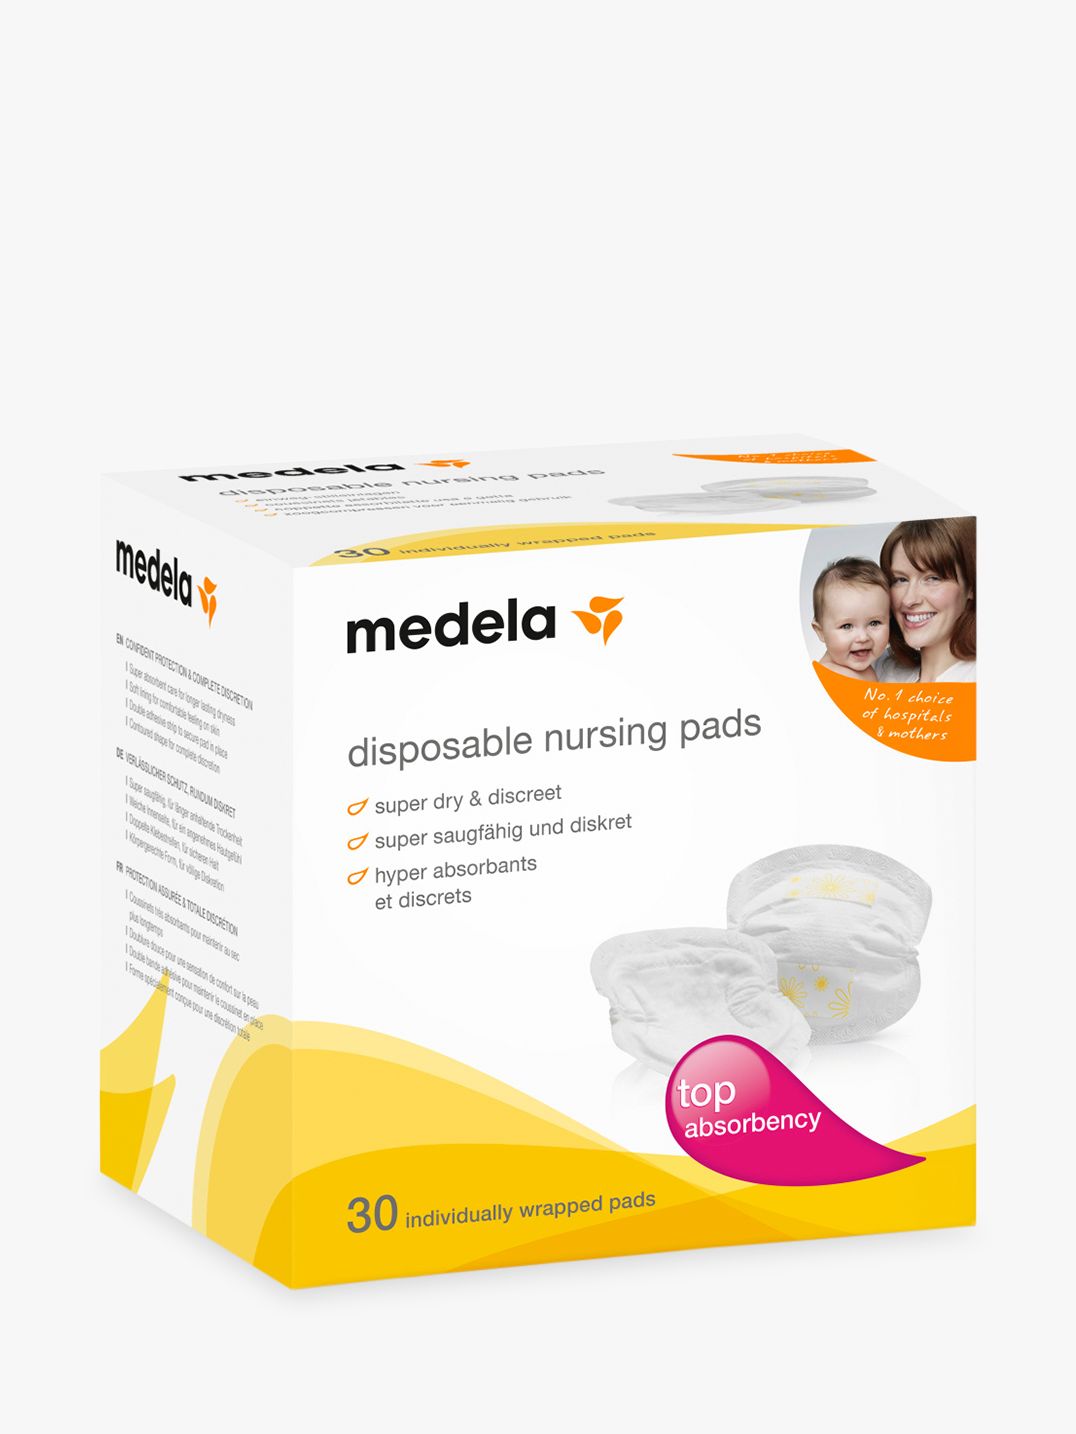 Medela Safe & Dry Ultra Thin (Pack of 30)